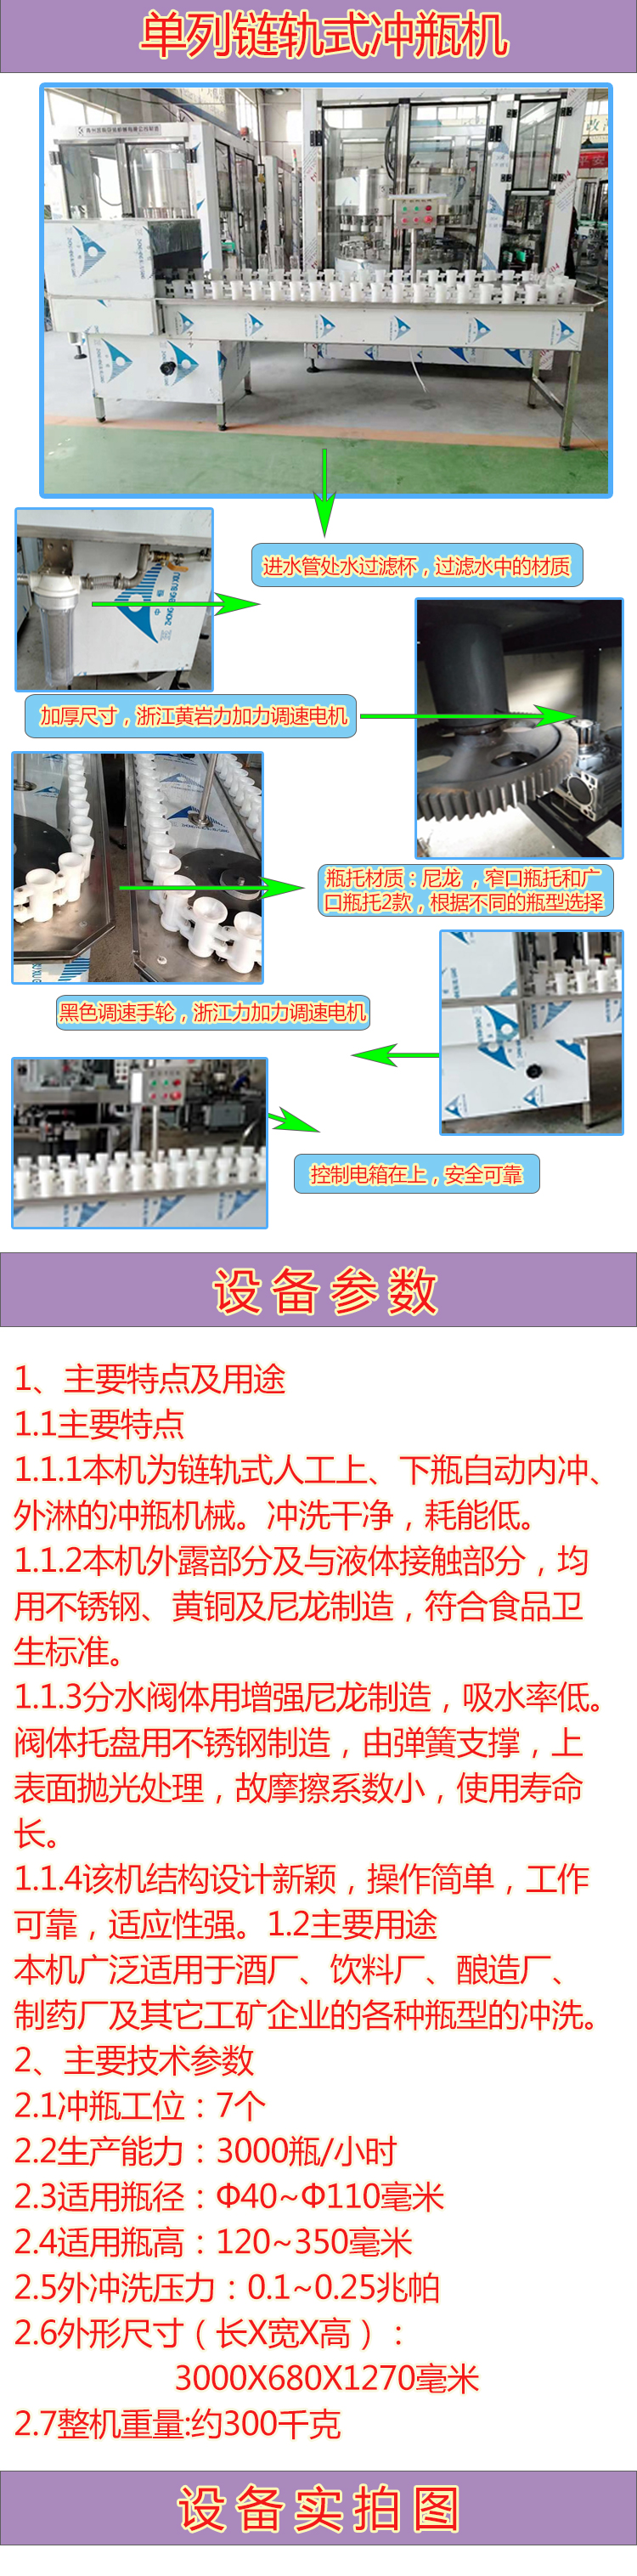 Chain track type glass bottle washing machine, specialized for distillery wine bottle washing machine, nylon bottle holder with adjustable speed